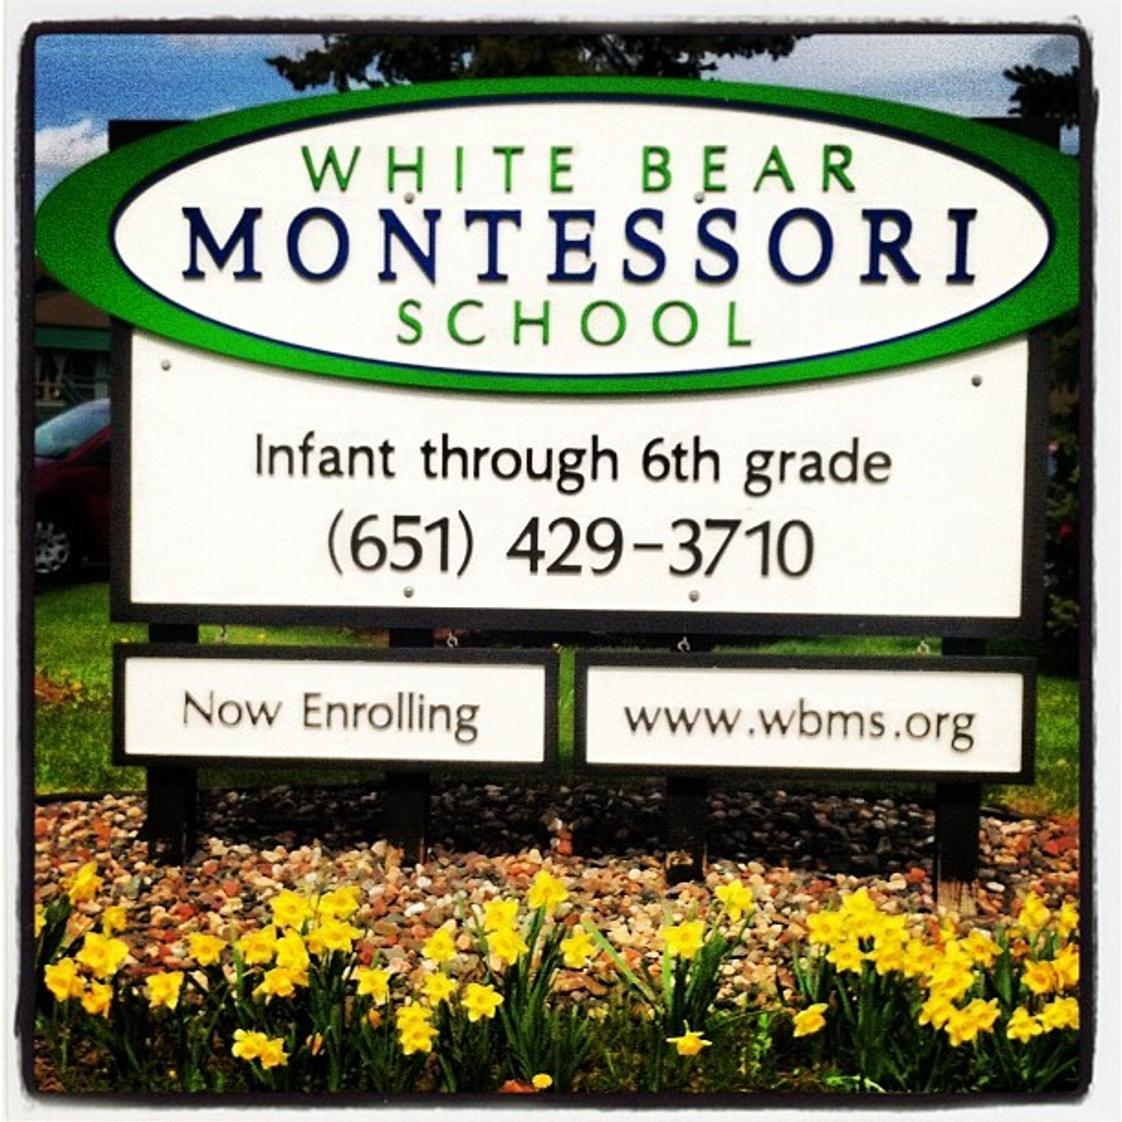 White Bear Montessori School Photo